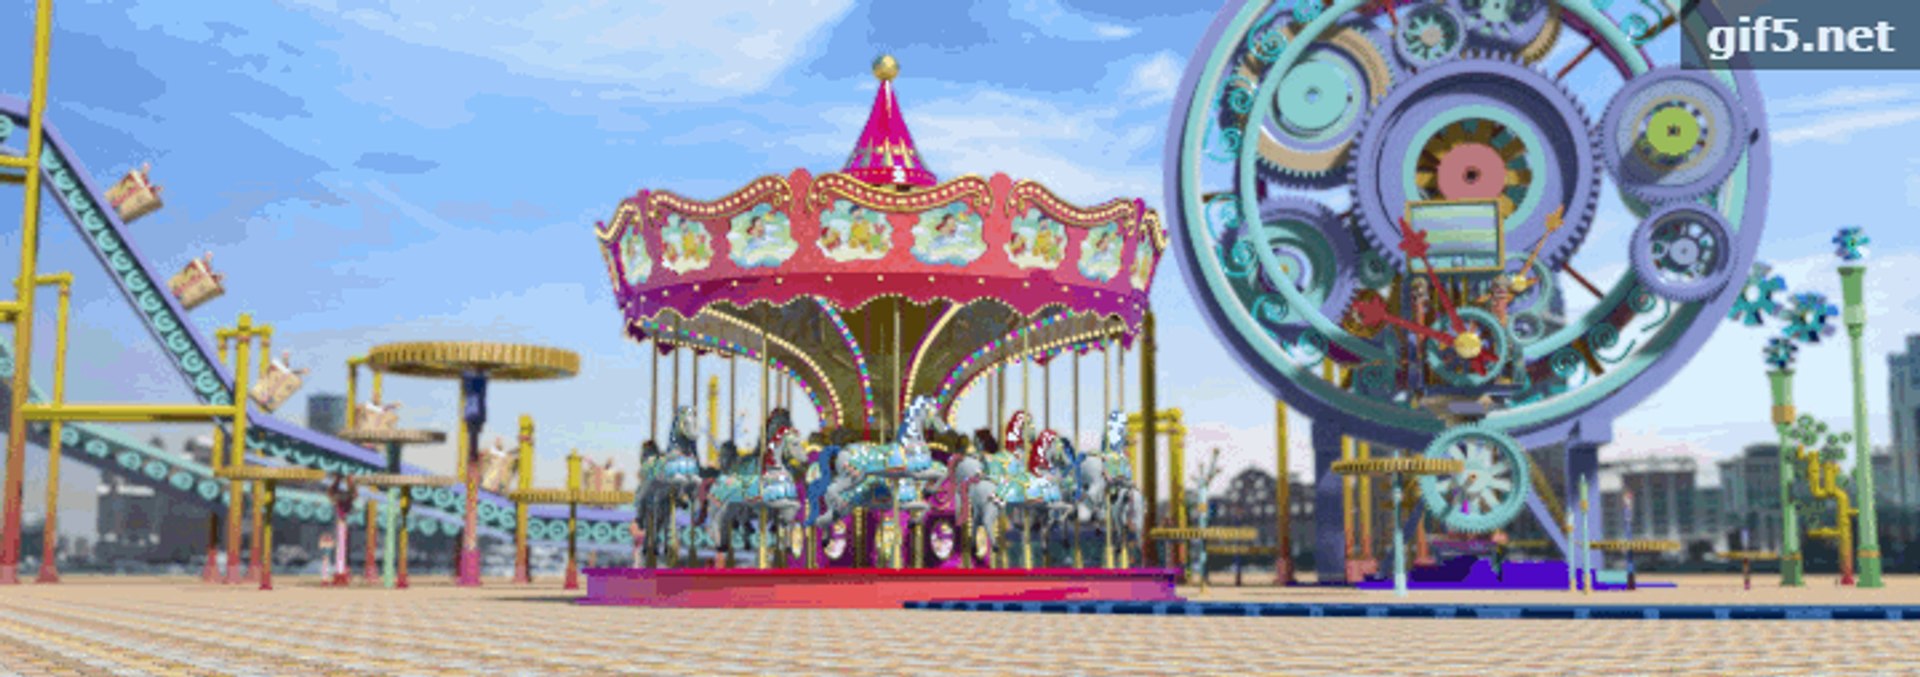 Tokyo One Piece Tower theme park to permanently shutdown｜Arab News Japan